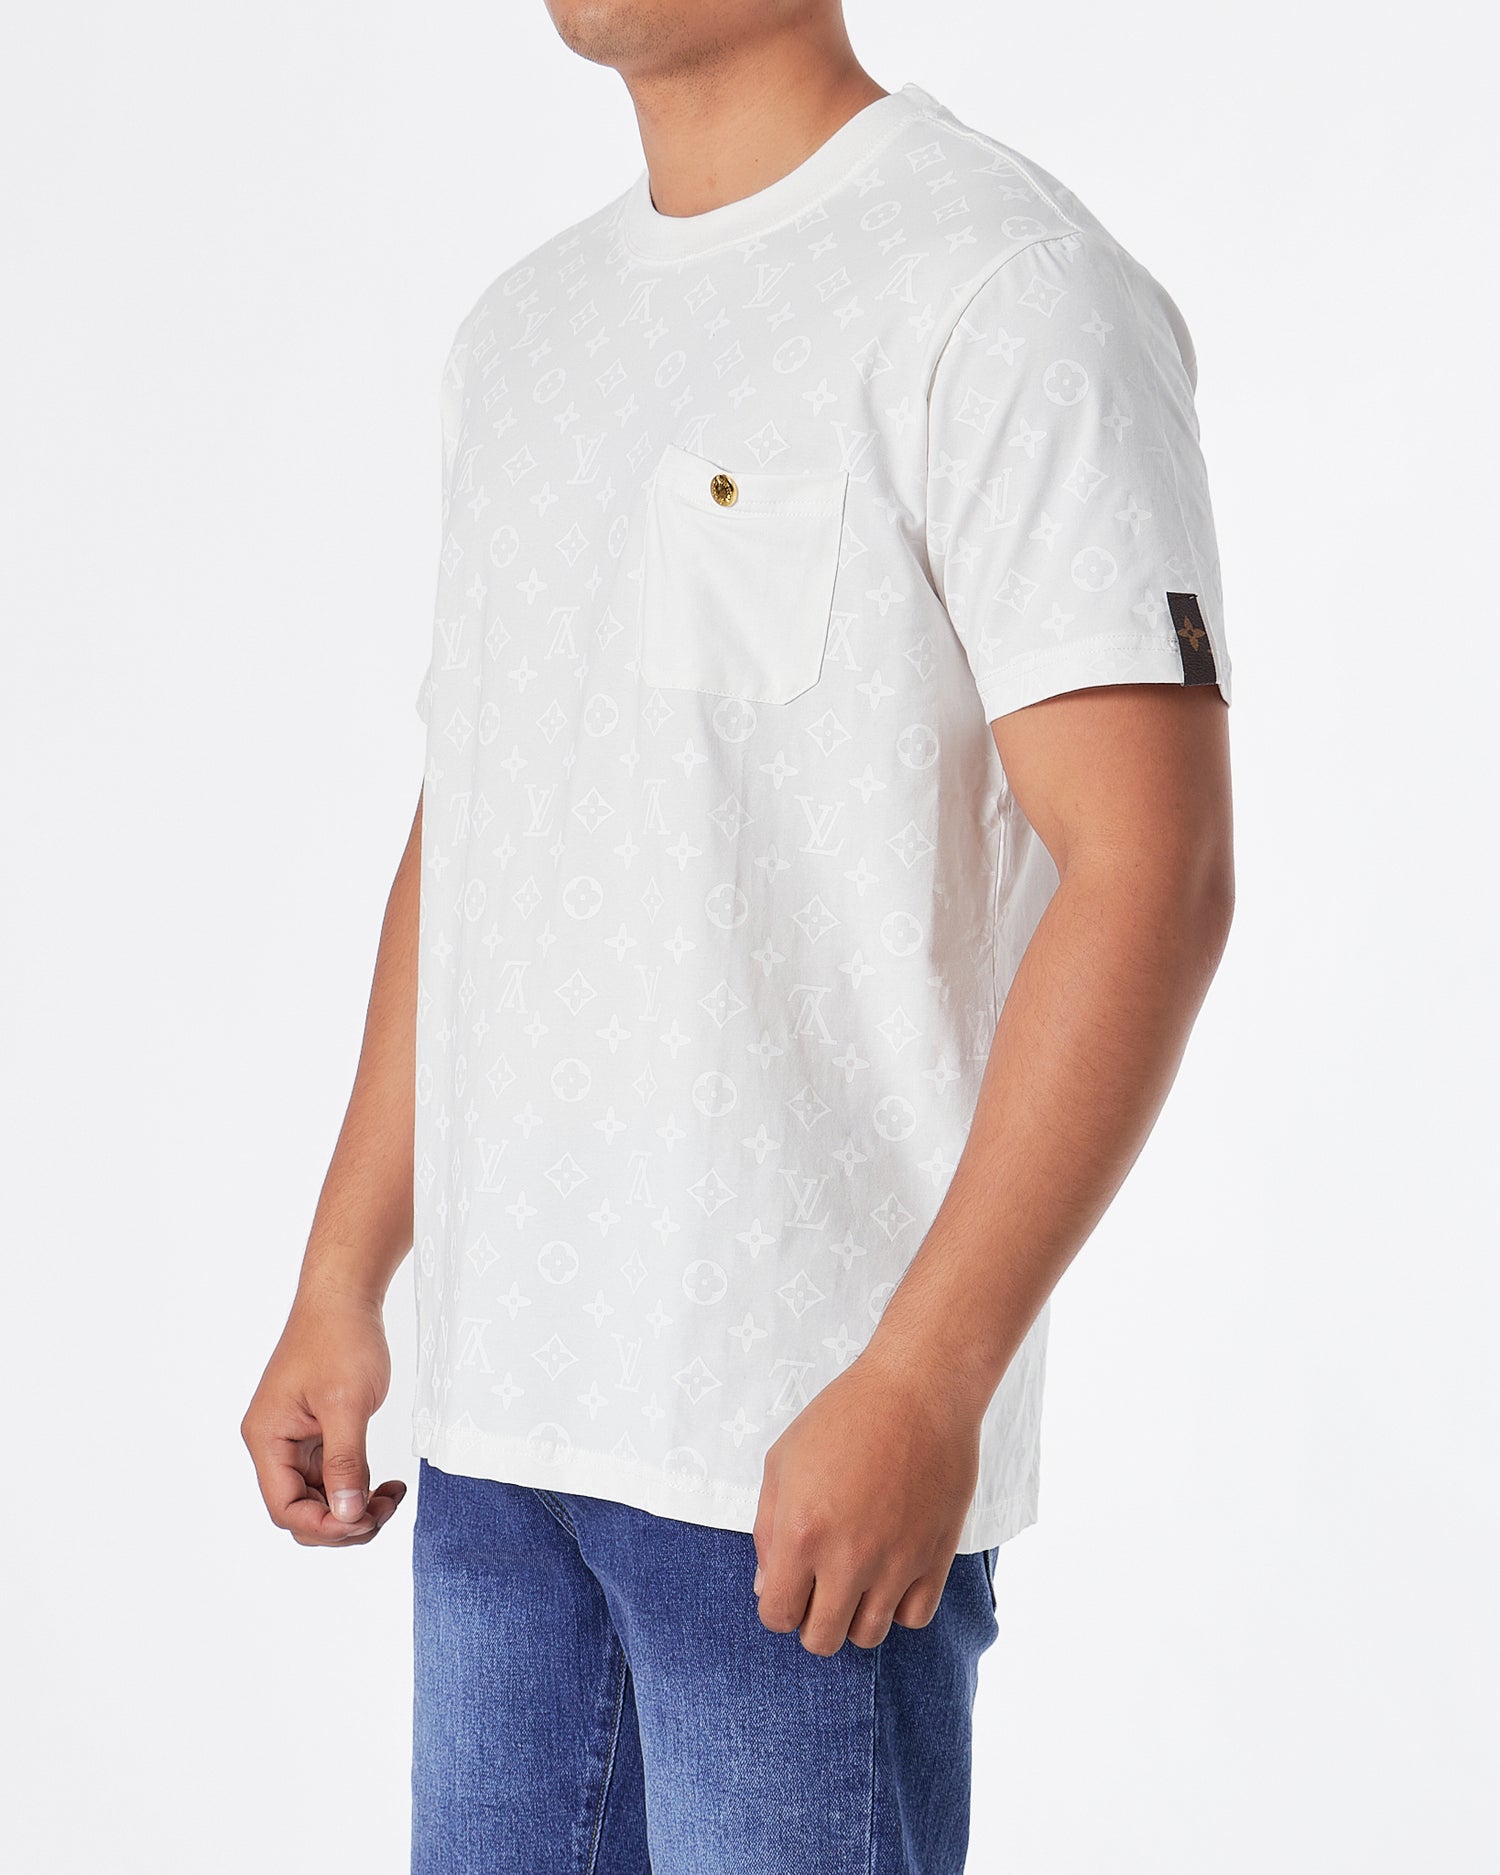 LV Monogram Over Printed Men Cream T-Shirt 24.90